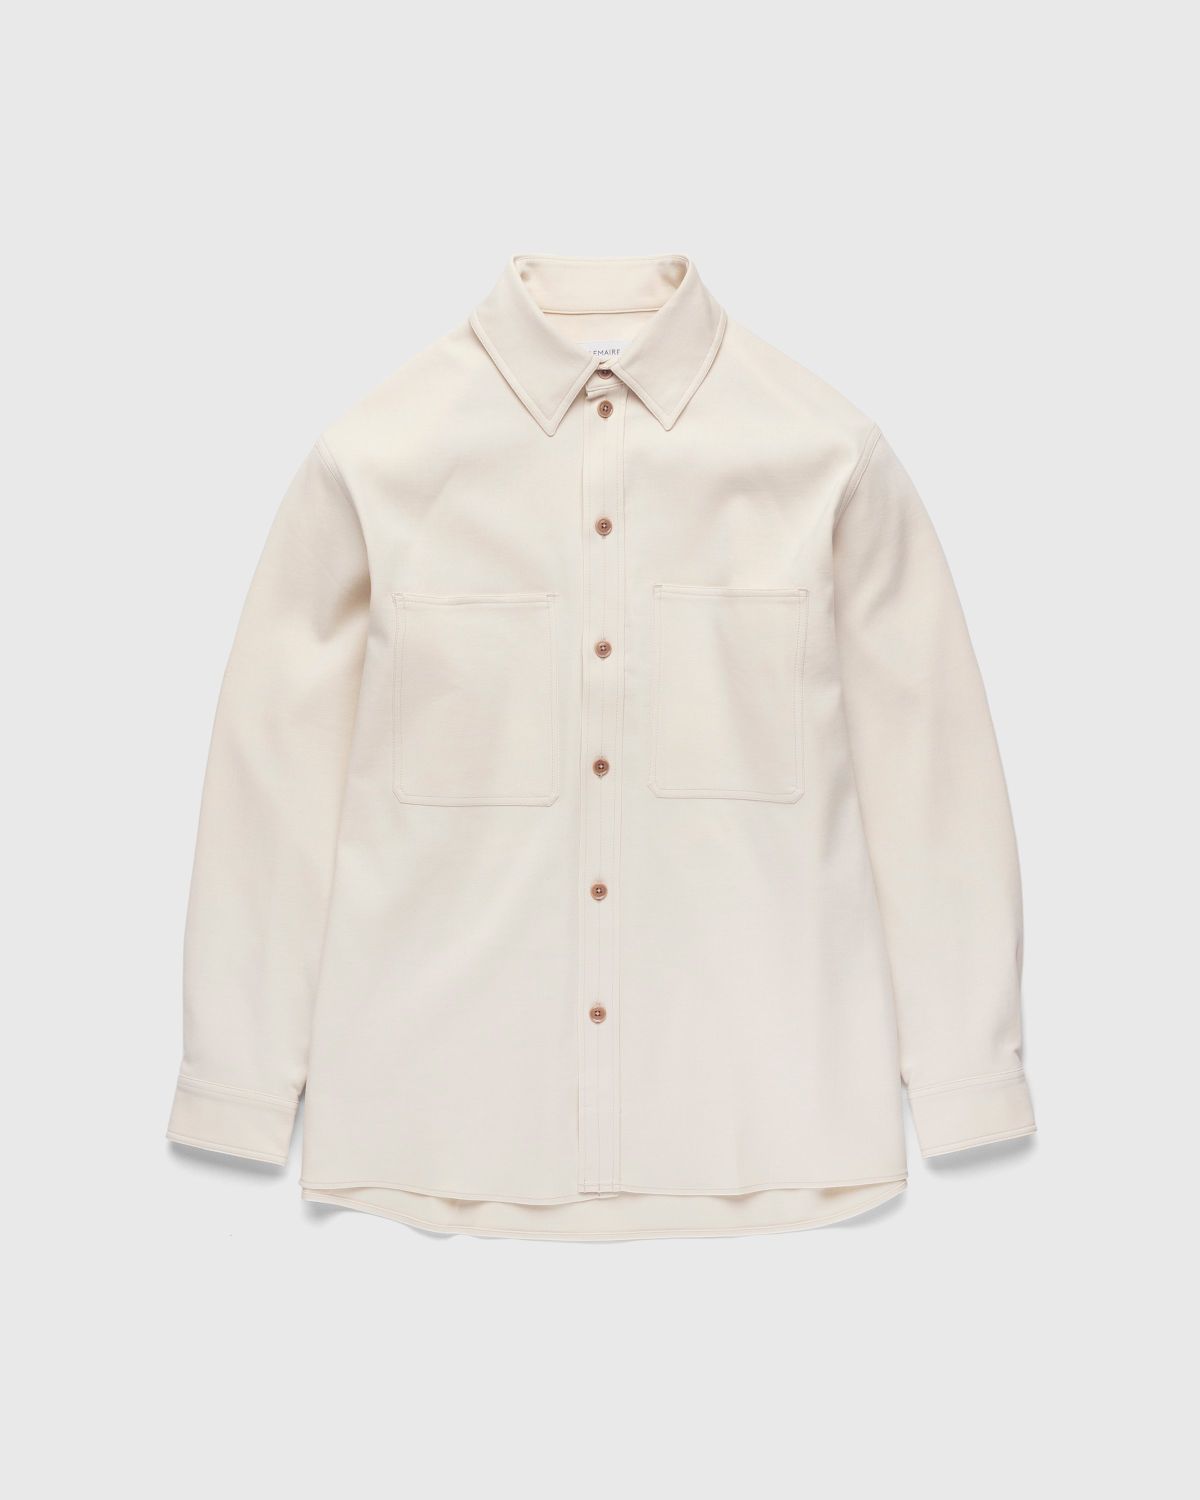 Lemaire – Wool Blend Shirt Beige - Longsleeve Shirts - Beige - Image 1